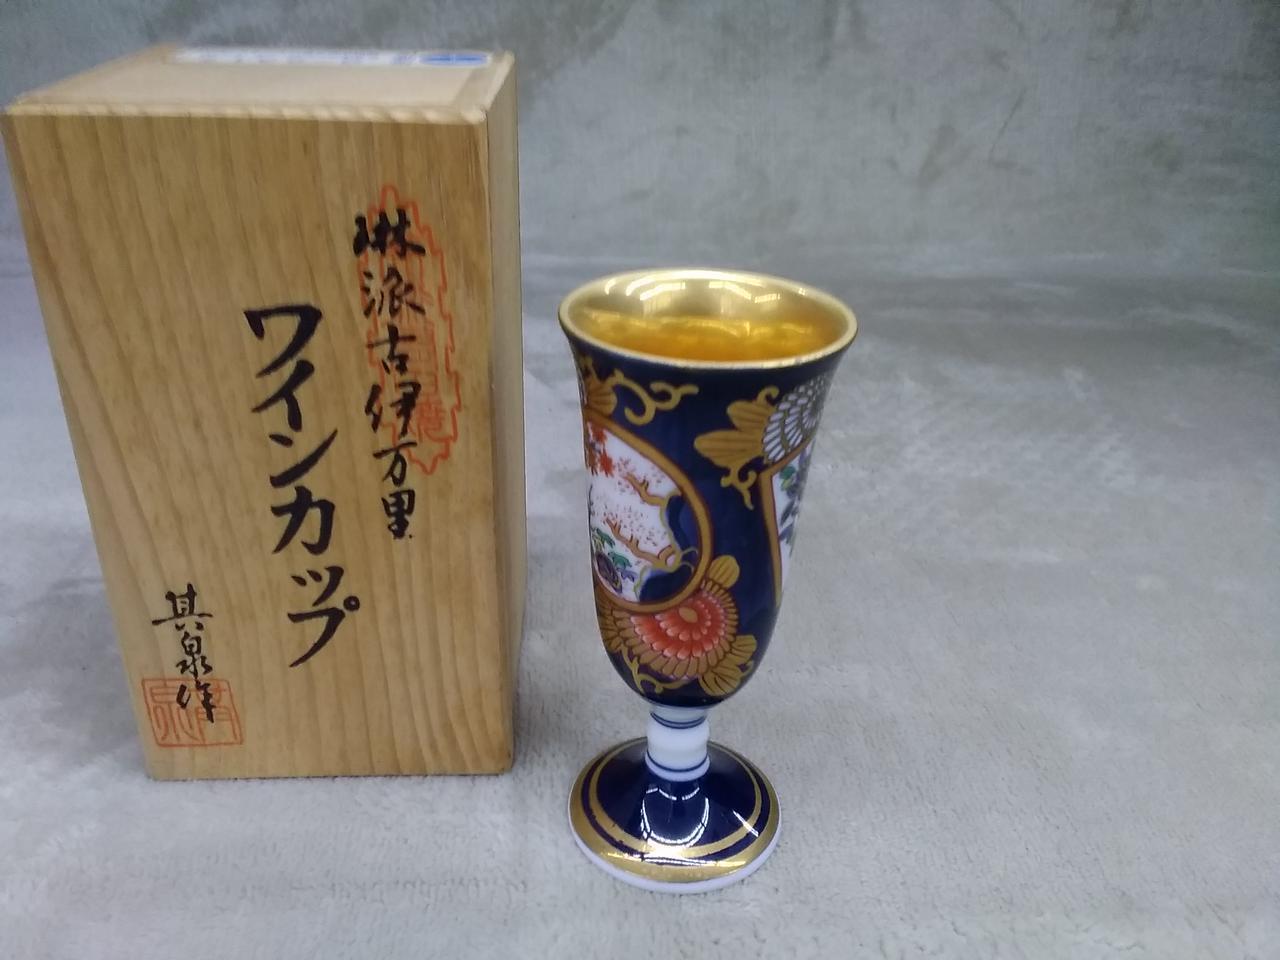 Sake vessel Old Imari Wine Cup By Kisen from Japan